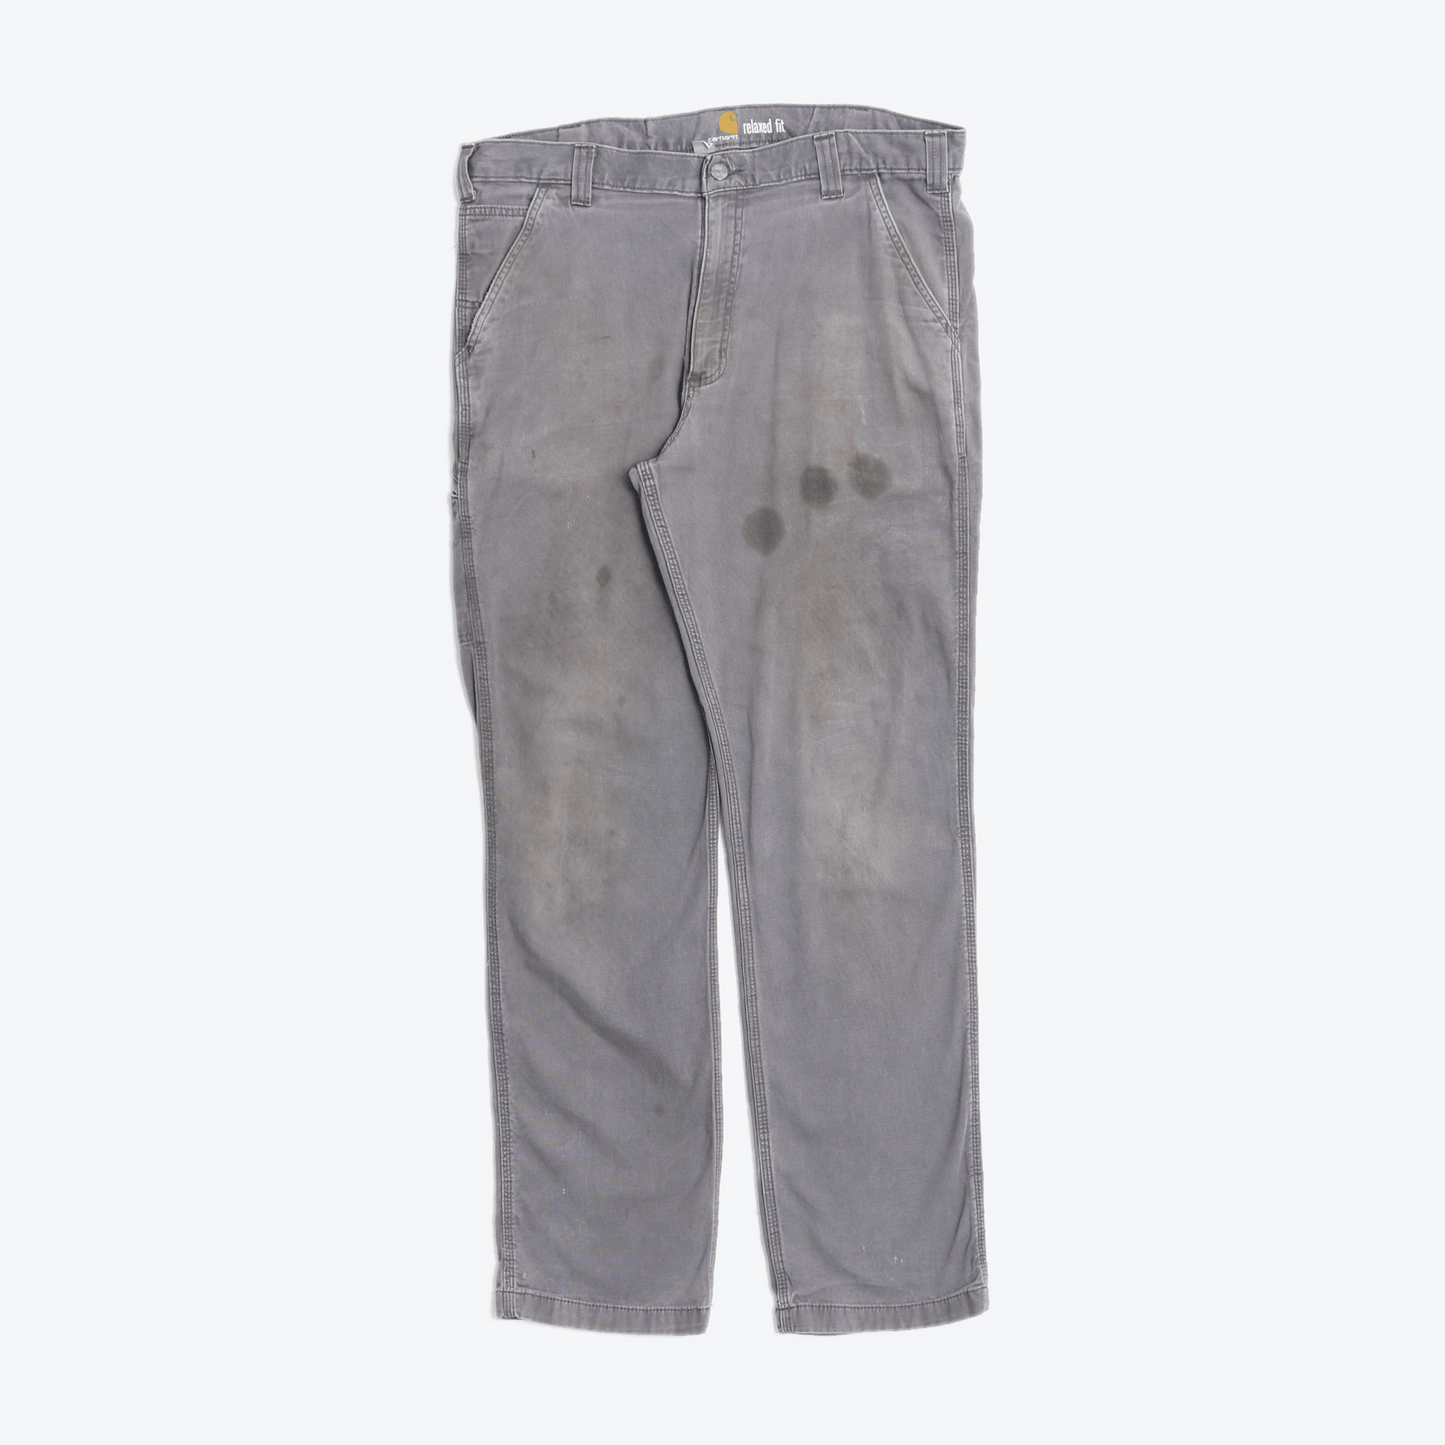 Vintage Pants - Grey - 36/34 - American Madness